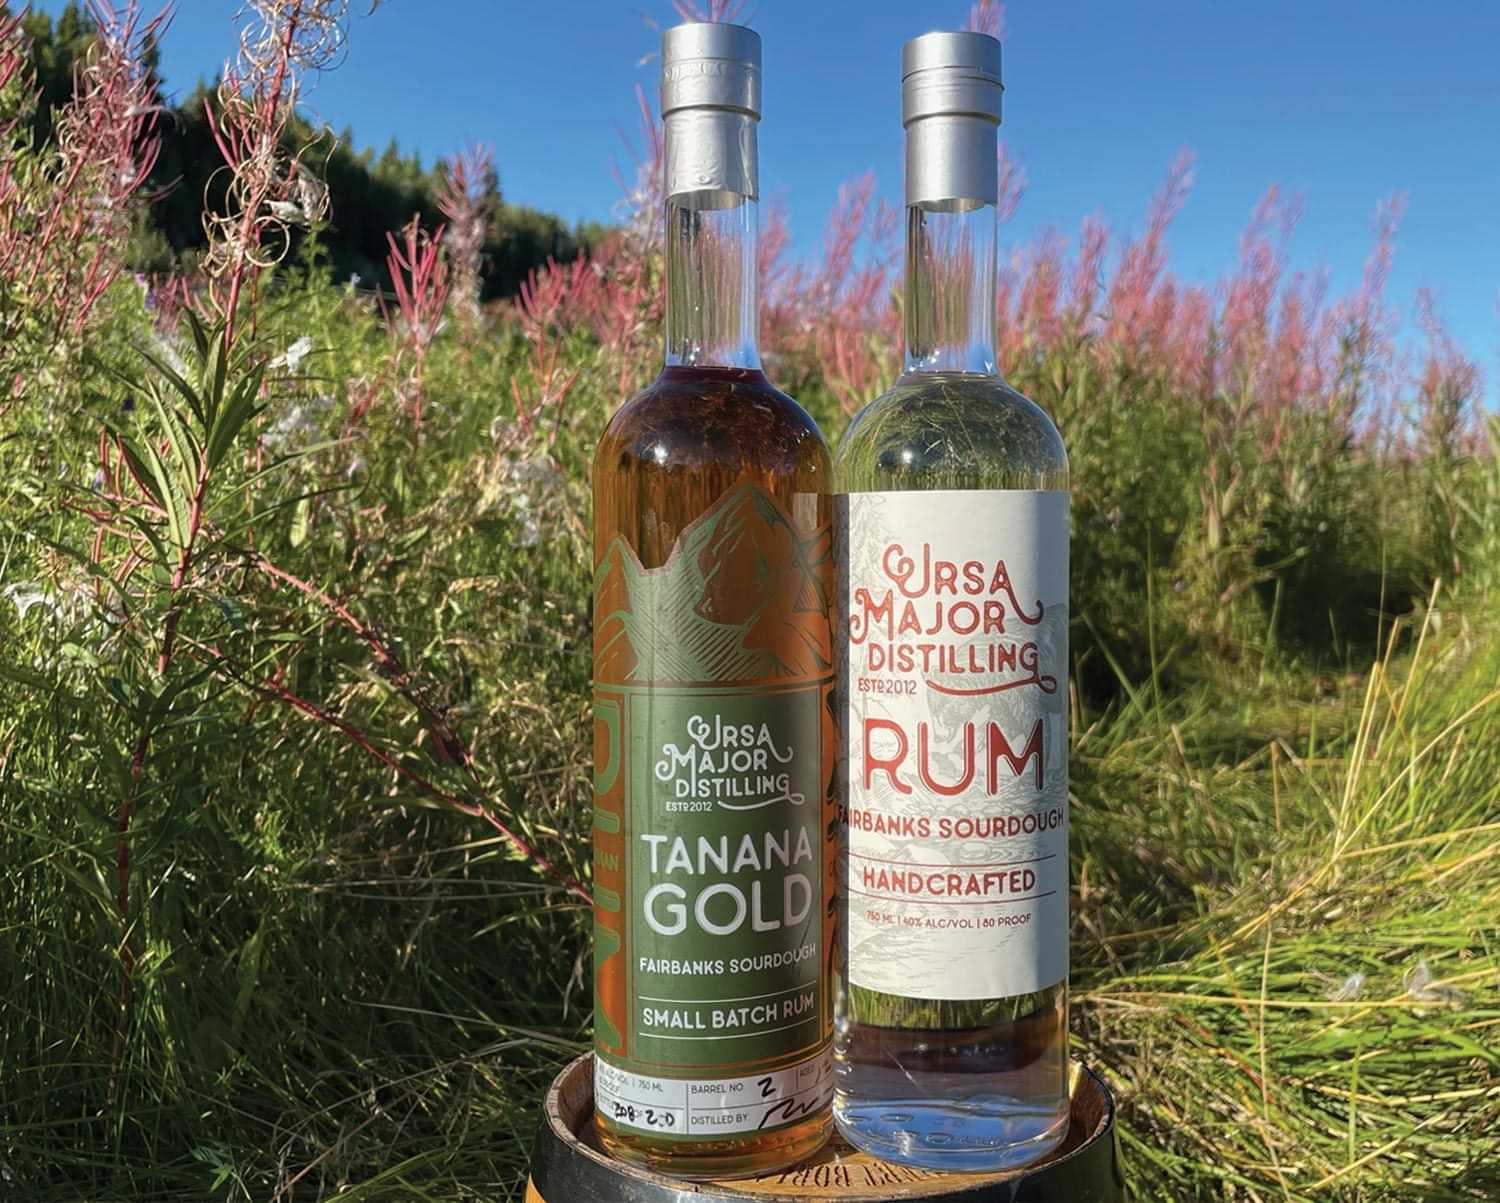 two bottles of rum from Ursa Major Distilling sit on a barrel among shrubs